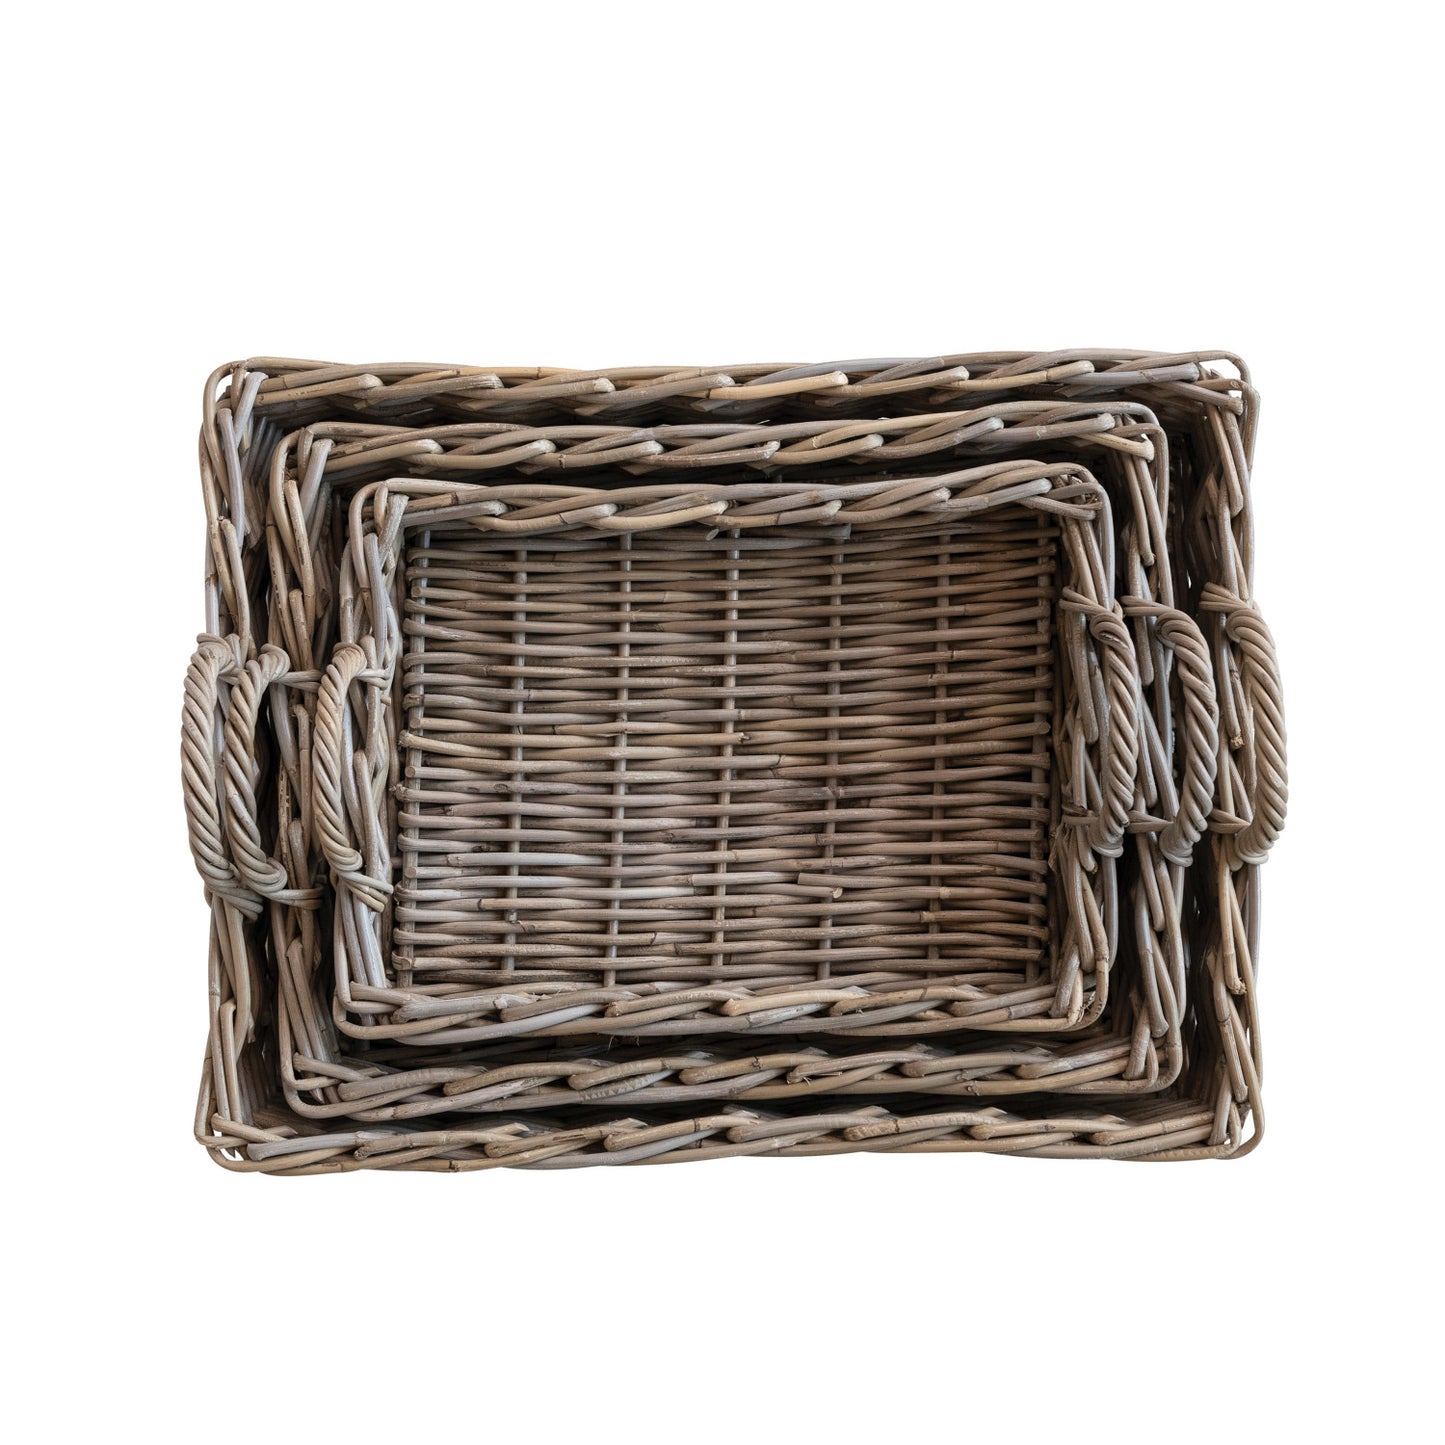 Decorative Woven Rattan Trays w/ Handles